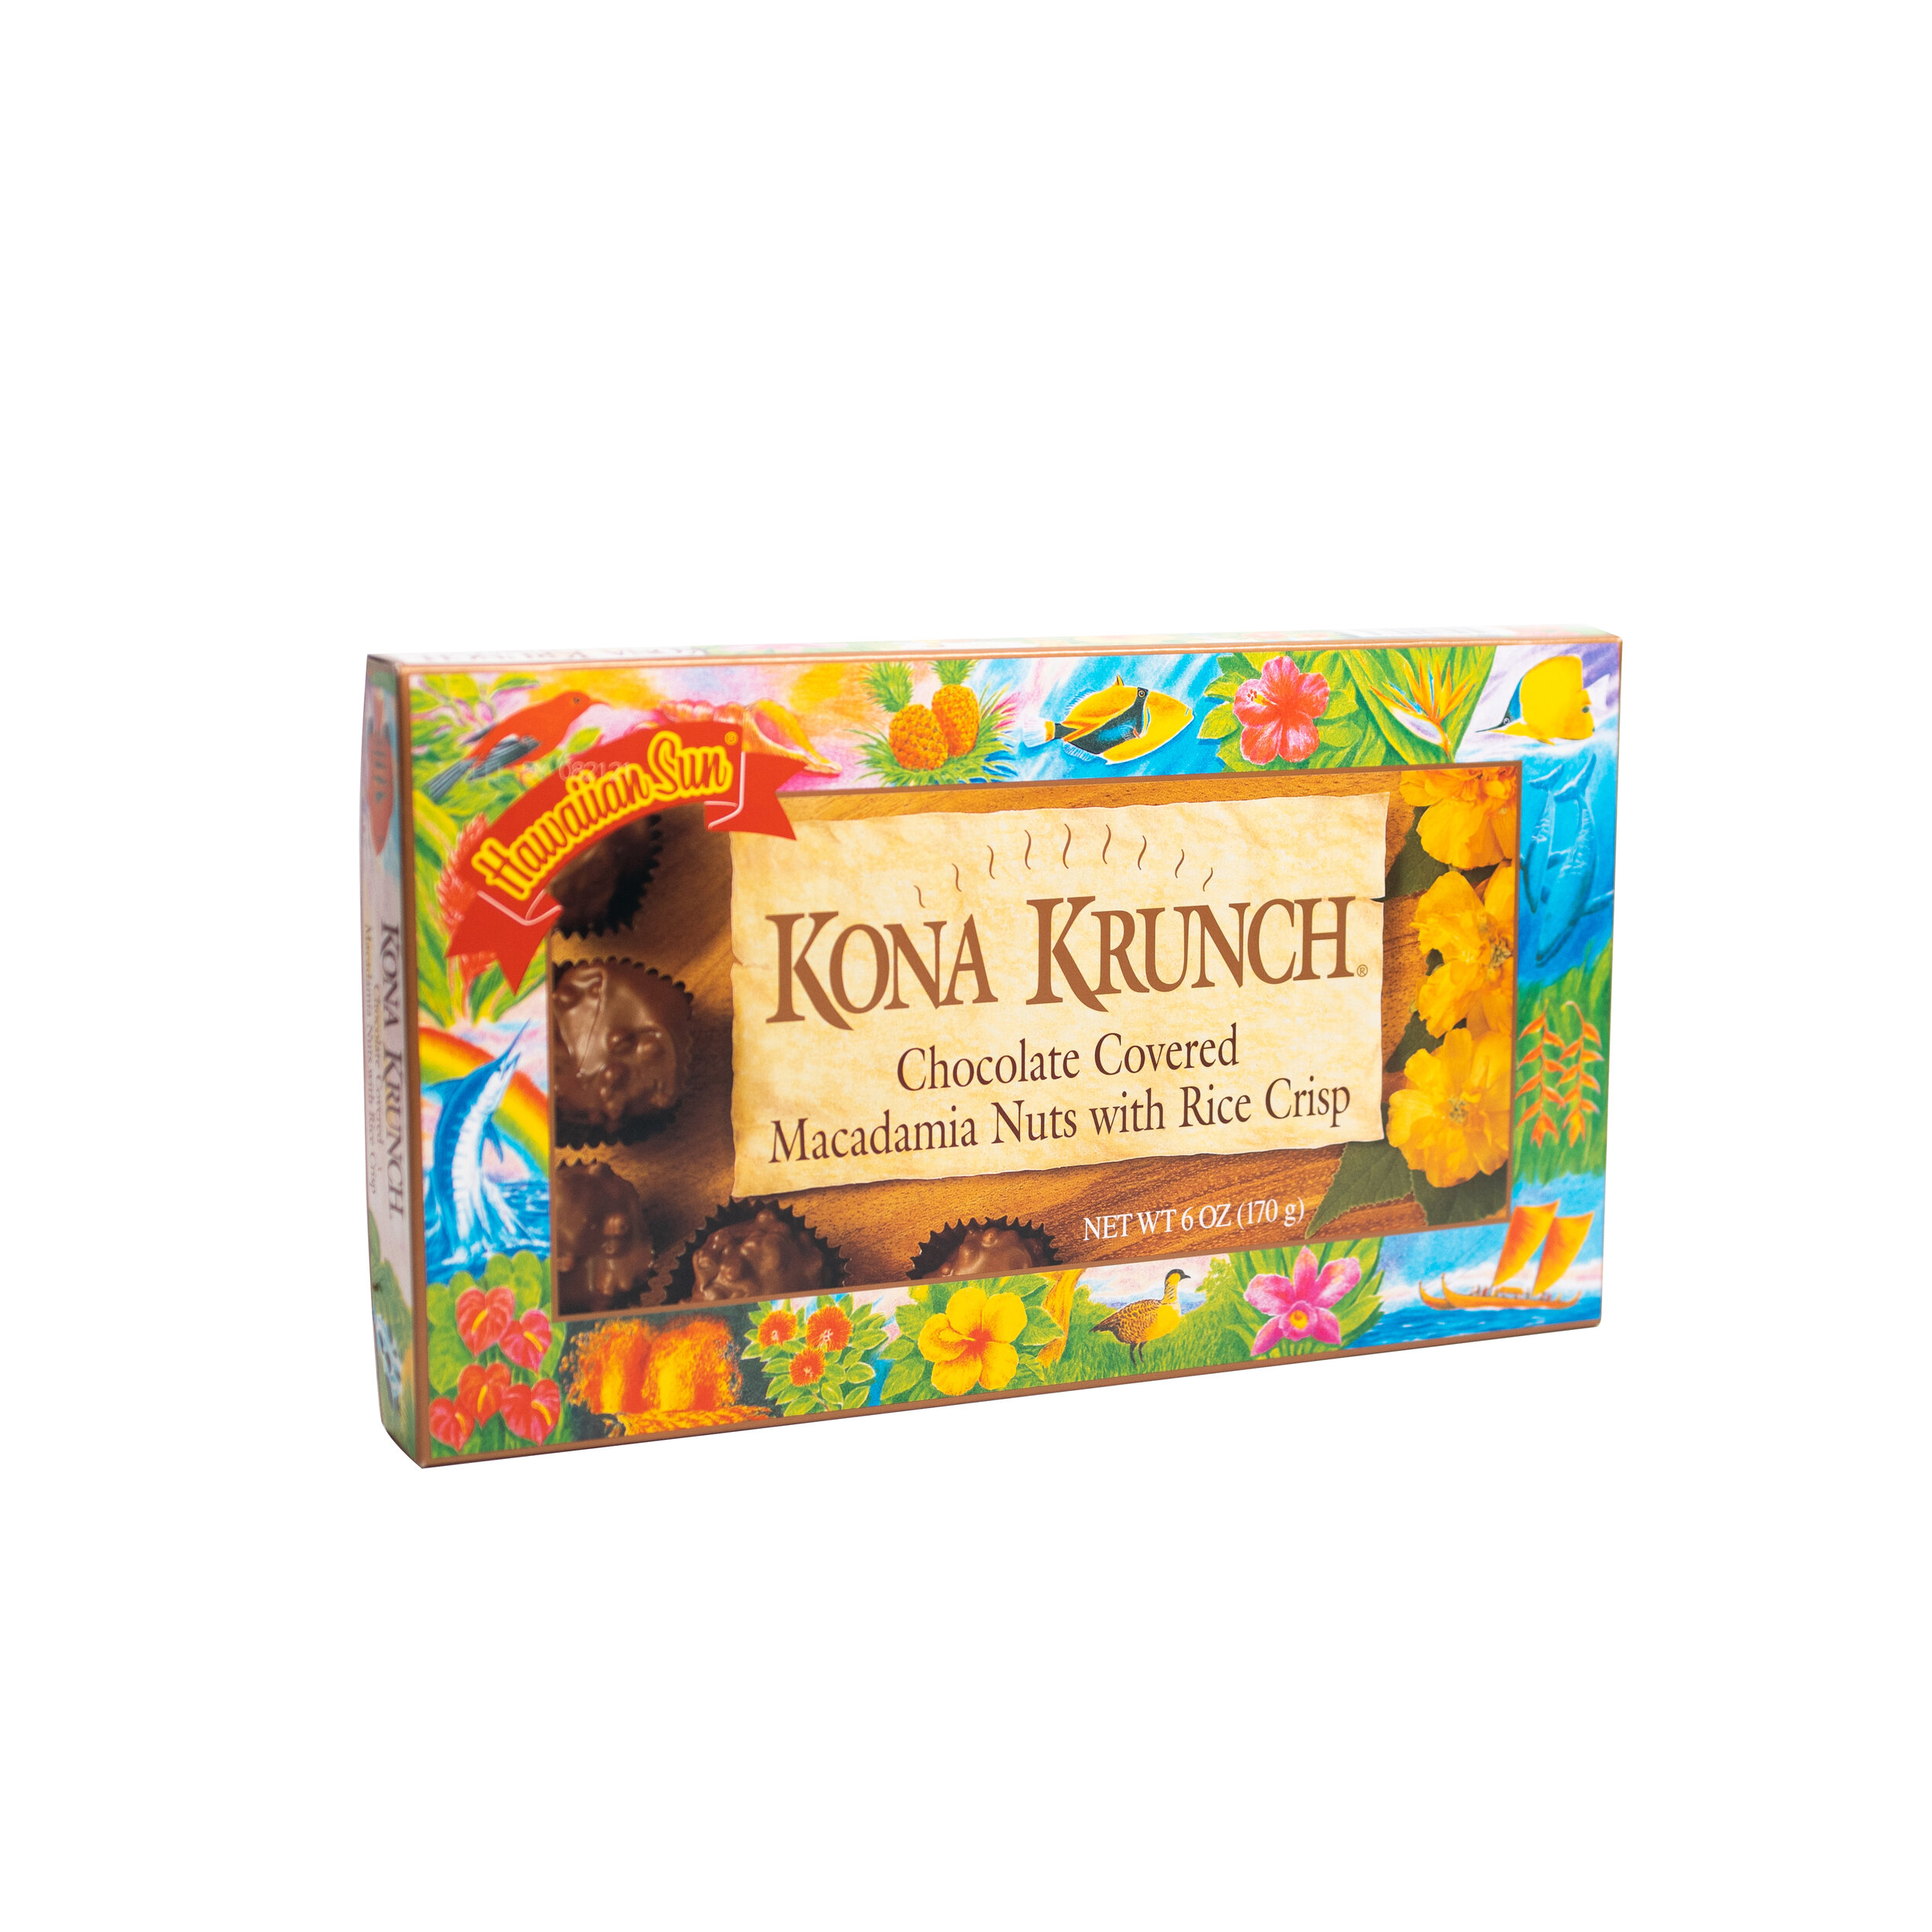 Kona Krunch Chocolate Covered Macadamia Nuts